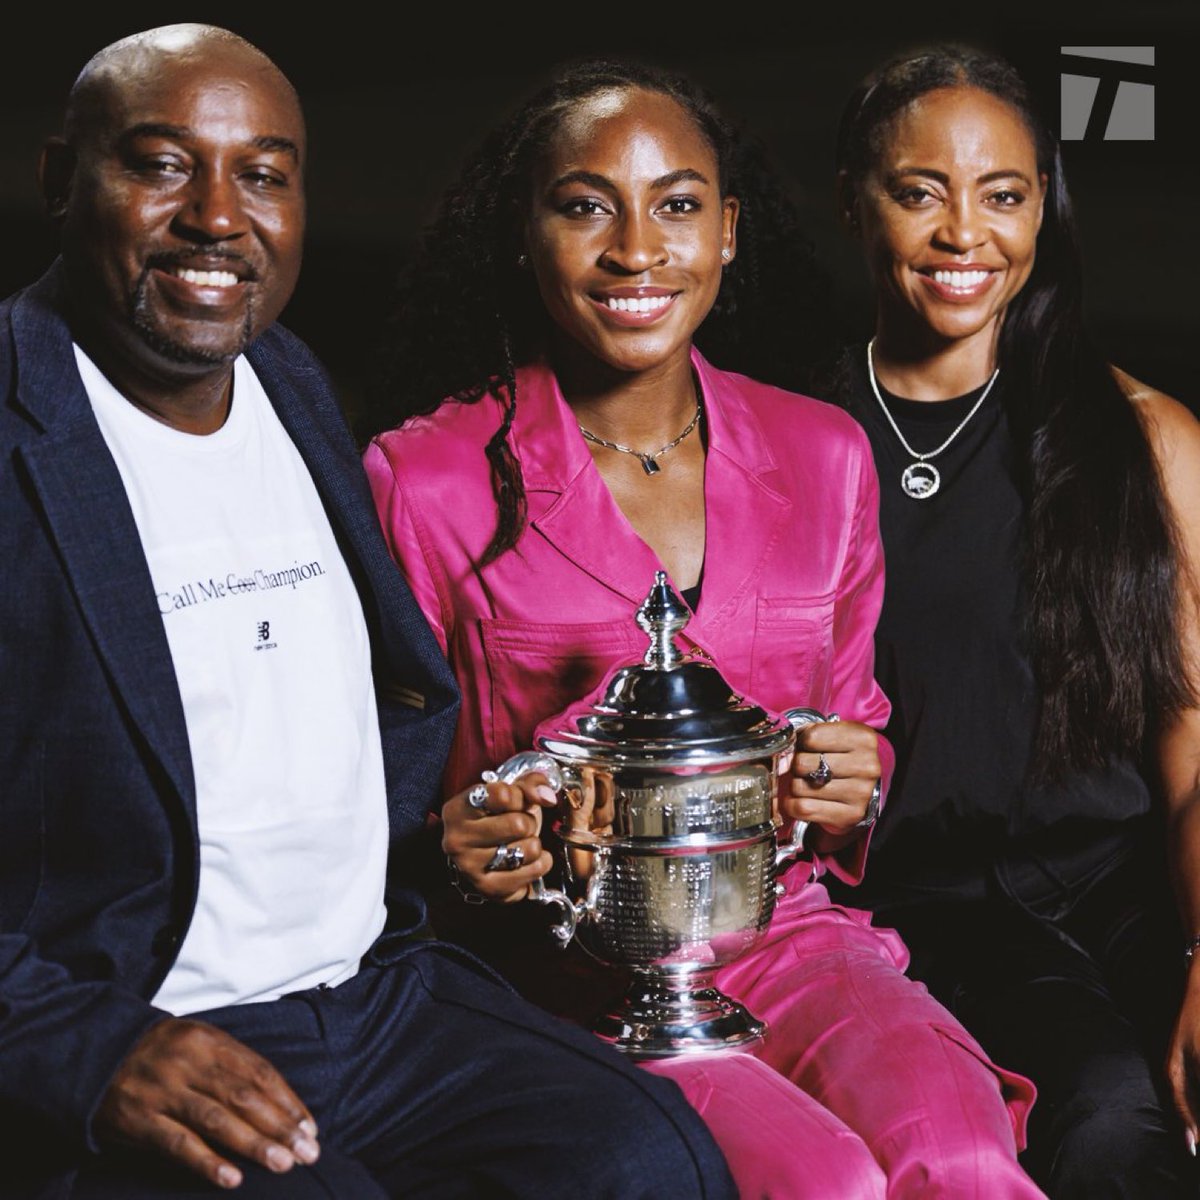 “The #USOpen  champ with her parents ❤️”
— @TennisChannel 

@CocoGauff #tennis #sports #BlackHistoryisAmericanHistory @BayStateBanner #BlackOwnedSince1965 @RMitchellBanner @andreocda